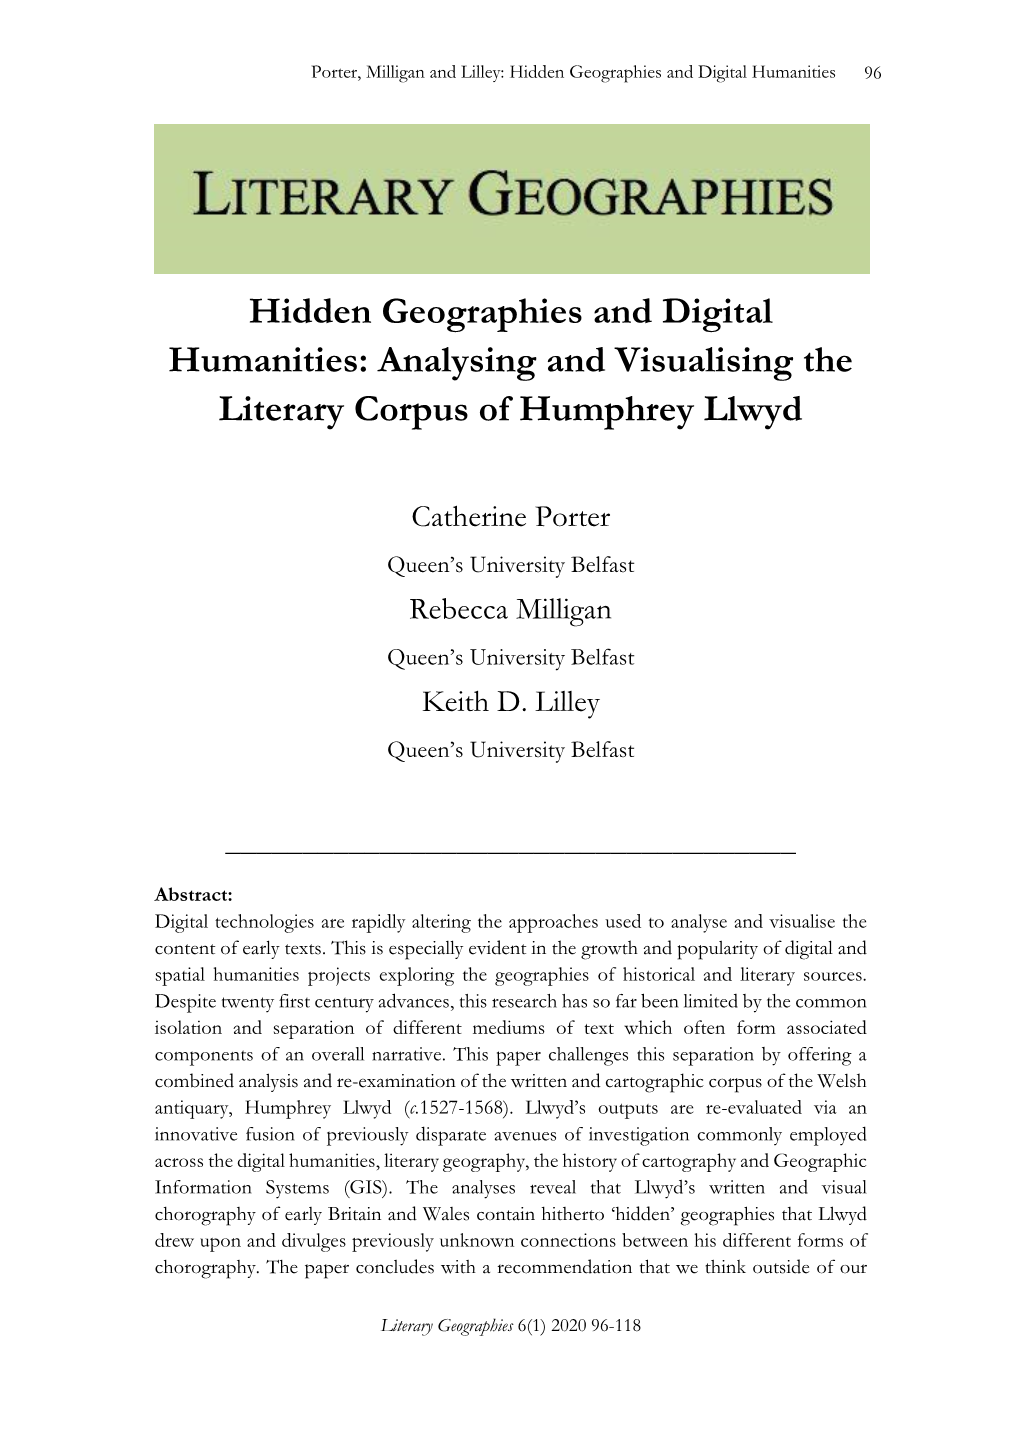 Analysing and Visualising the Literary Corpus of Humphrey Llwyd